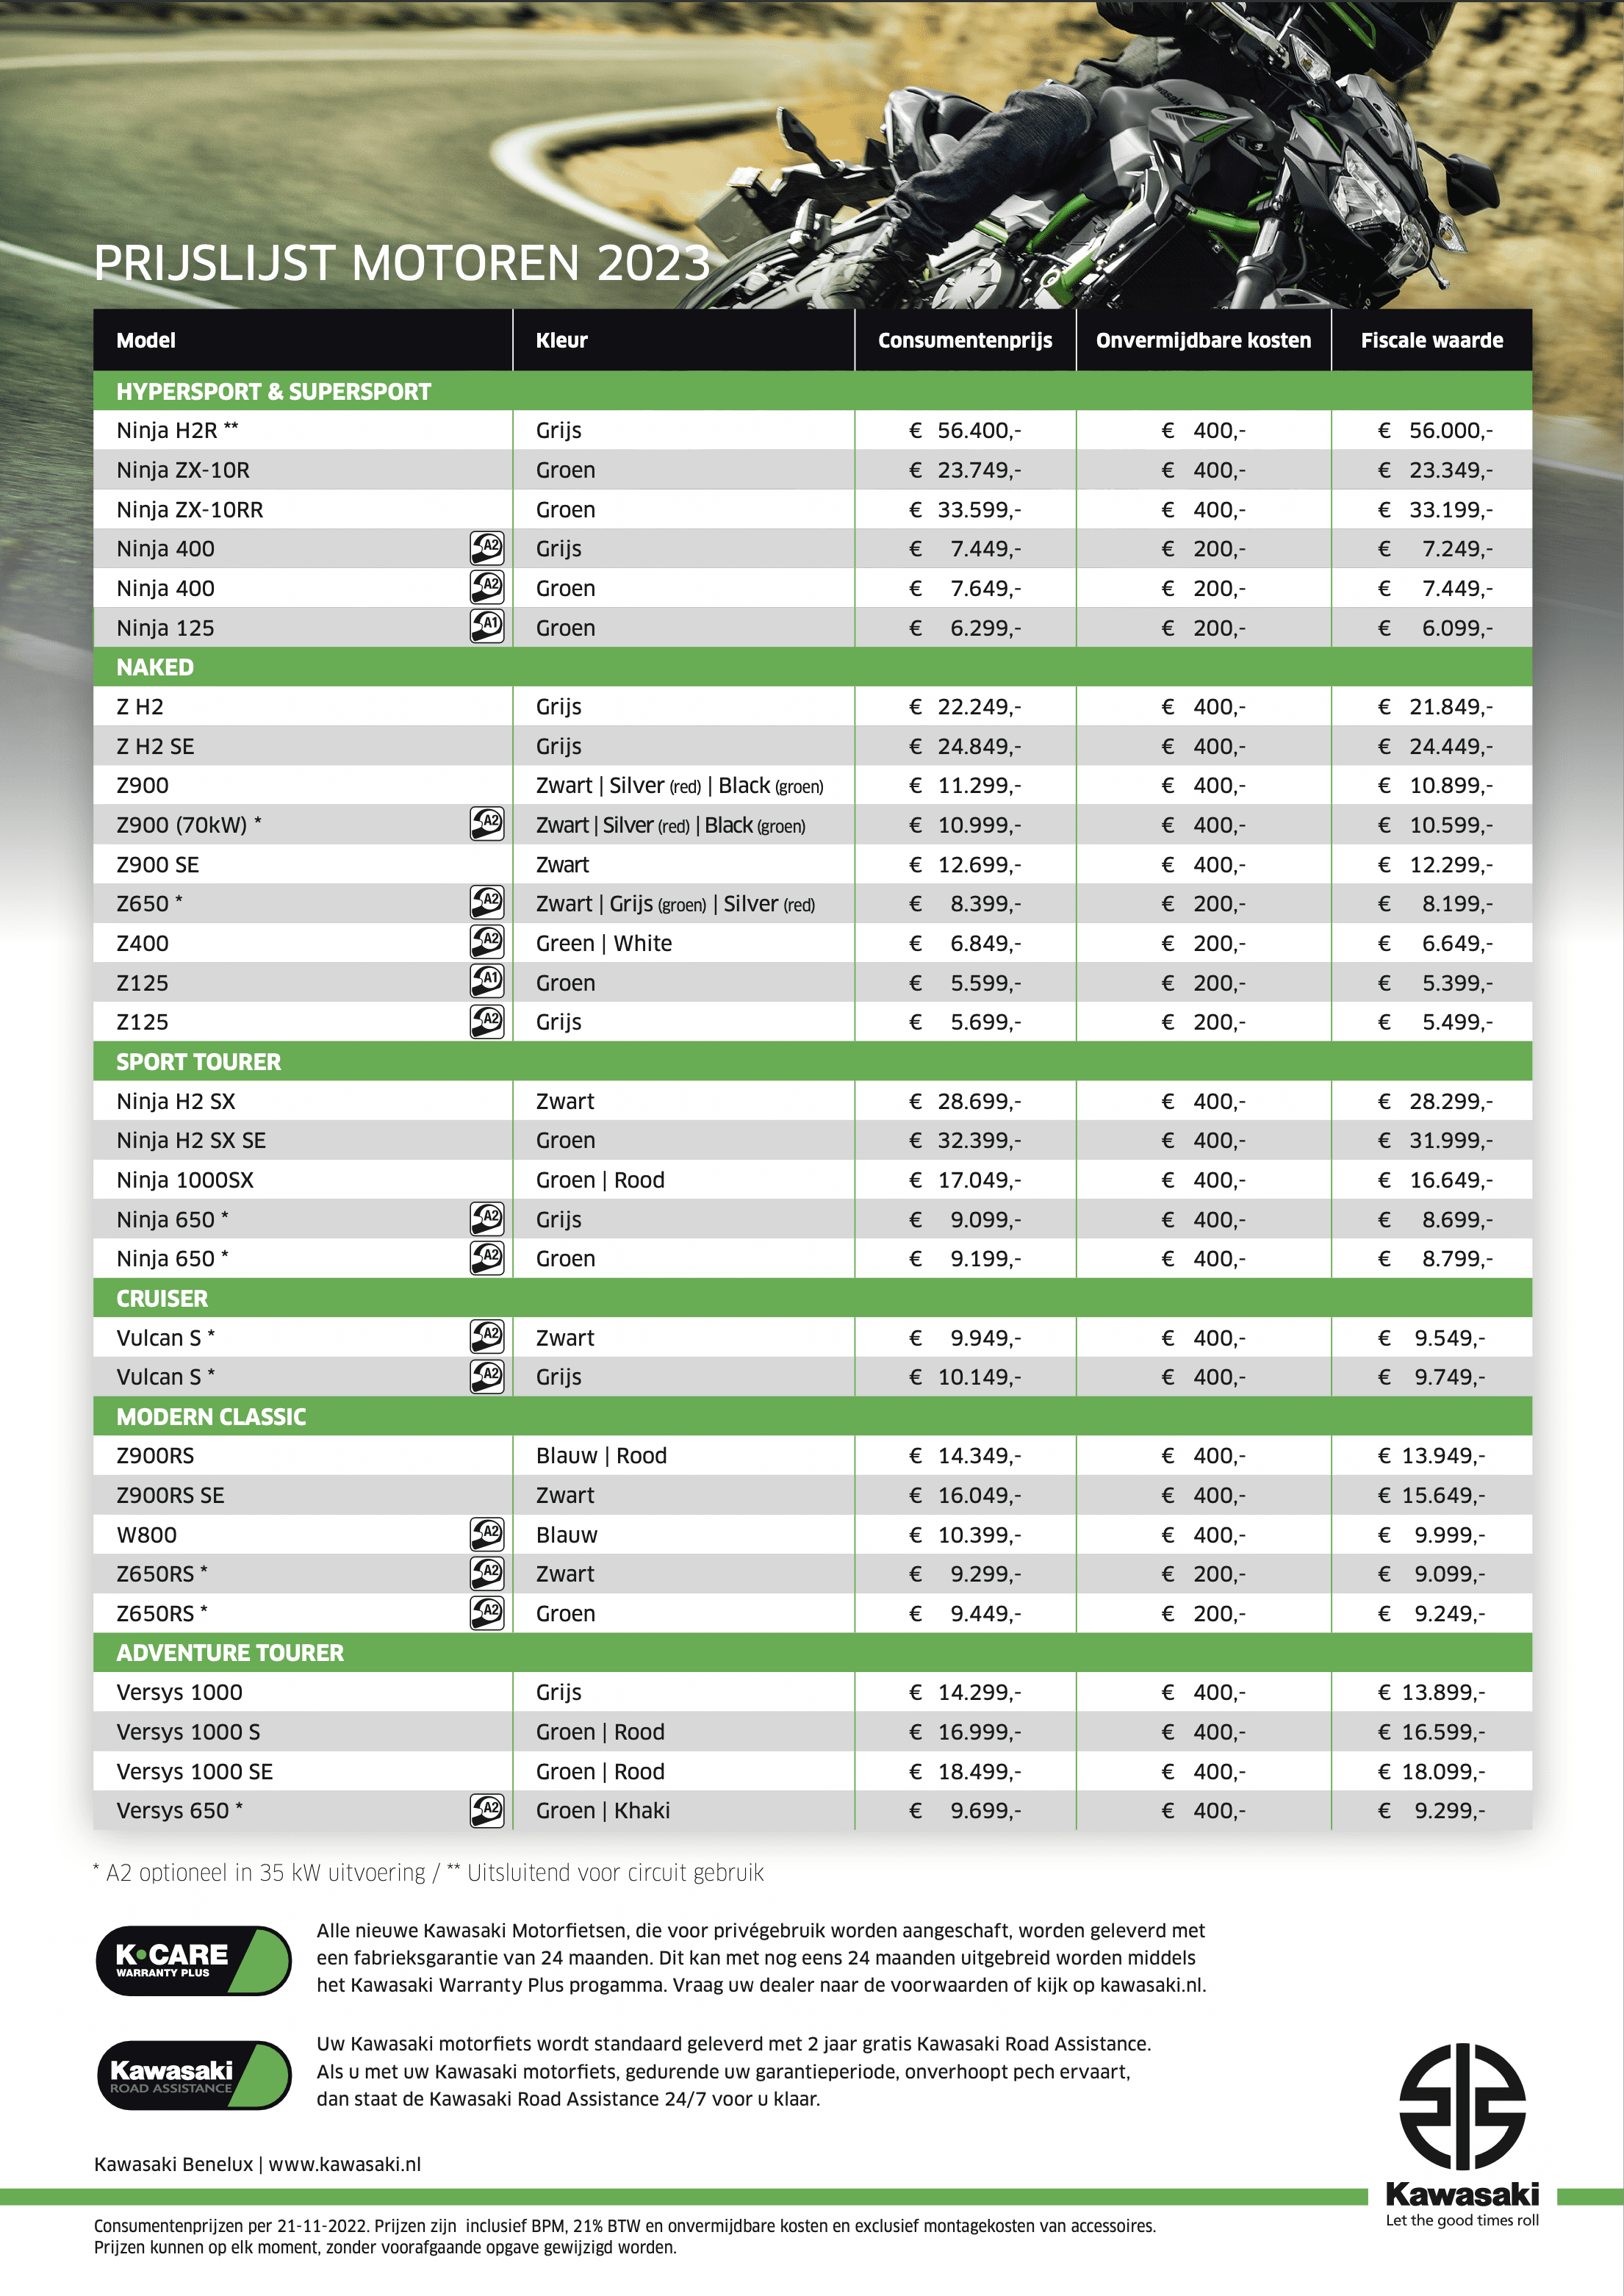 Kawasaki prijslijst motoren 2023